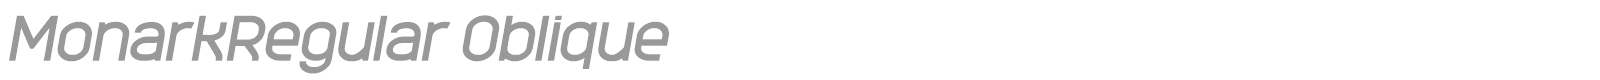 MonarkRegular Oblique font preview